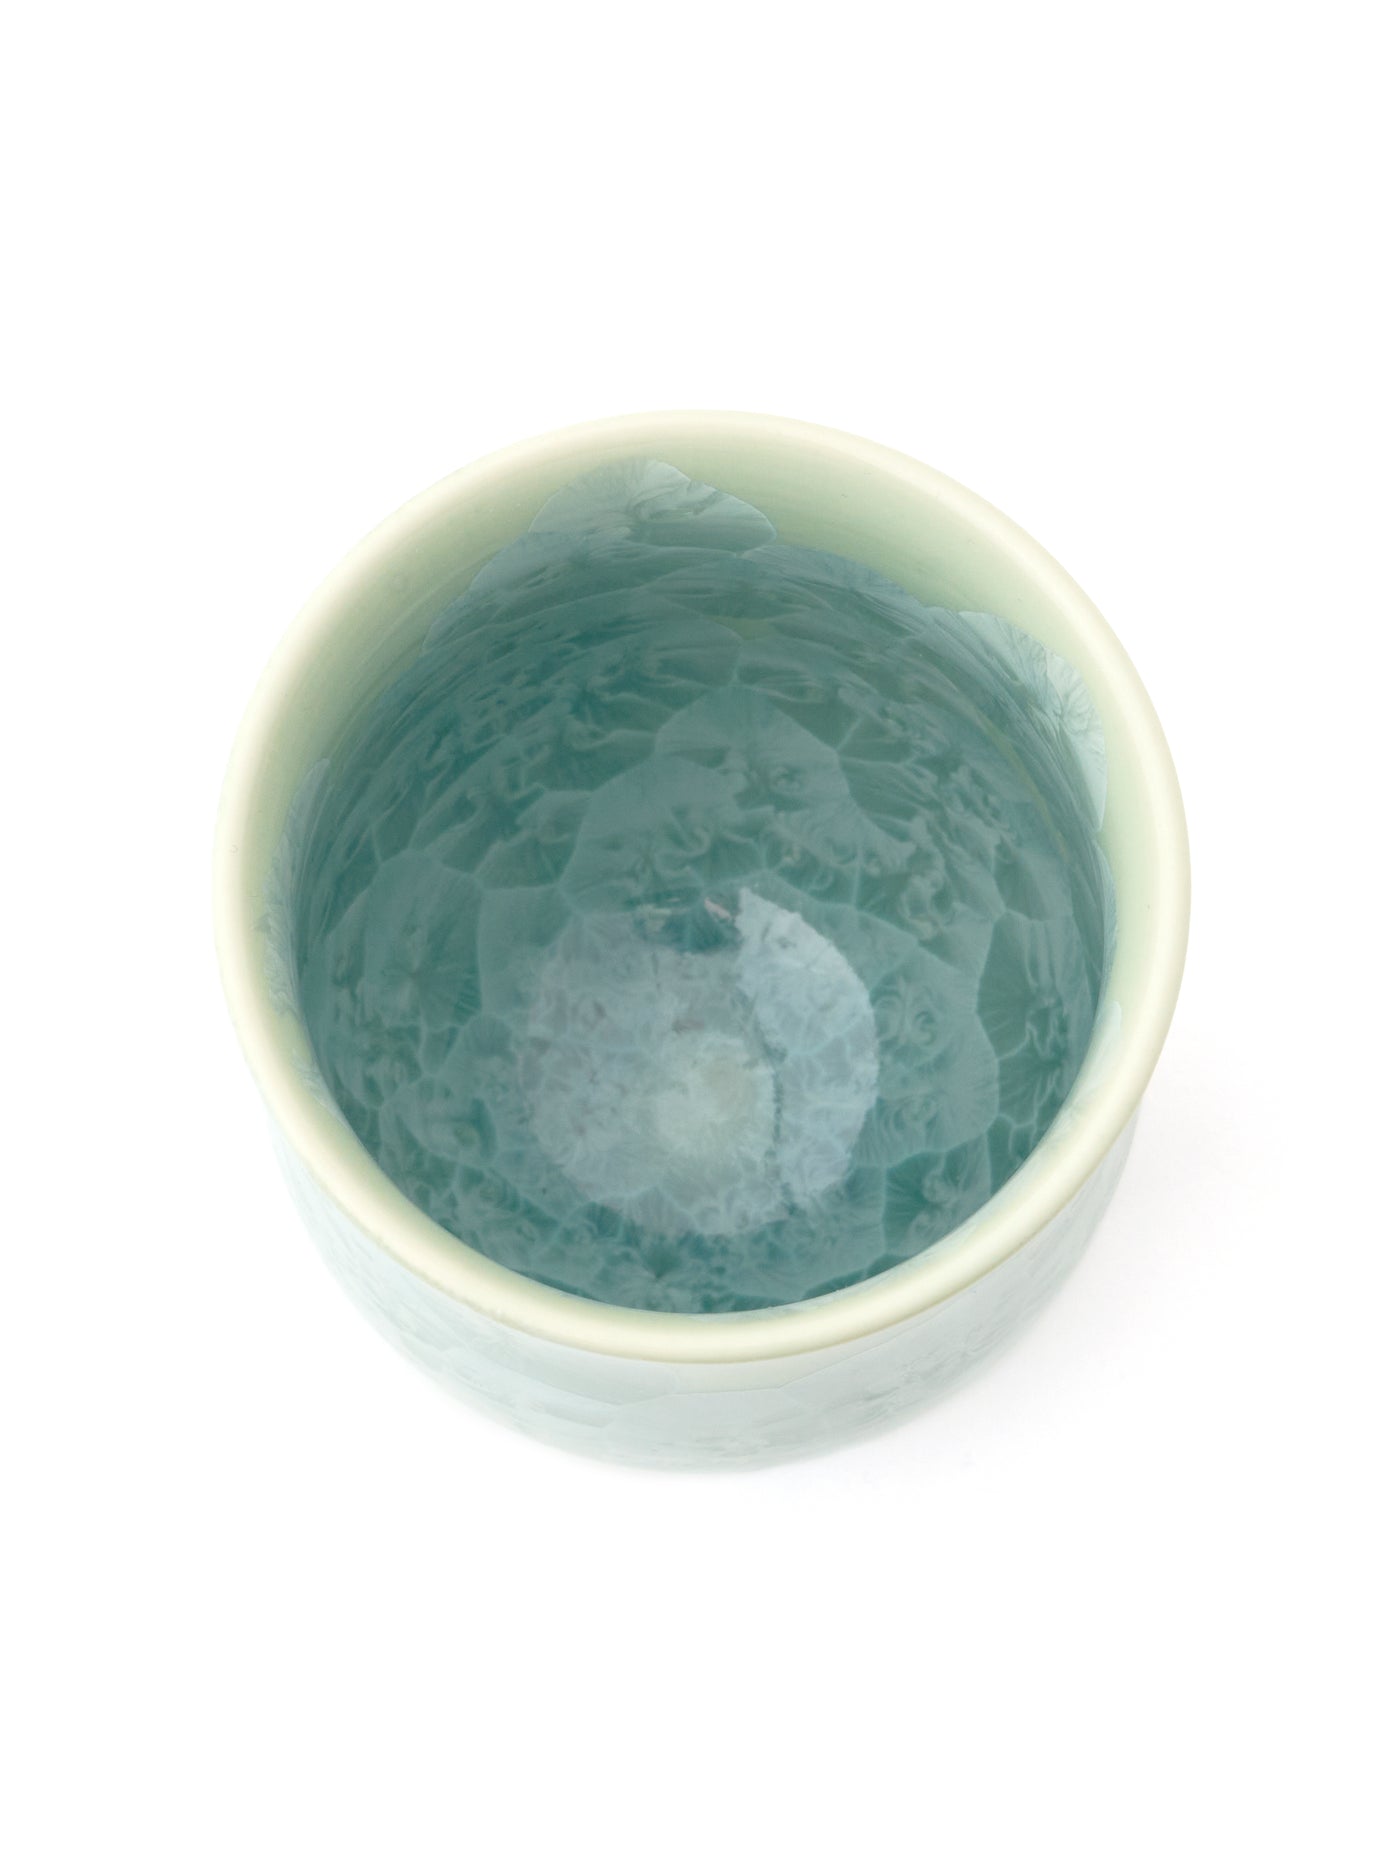 Green Crystal Kyoto Ware Yunomi Teacup Set by Touan (7fl.oz/200ml)